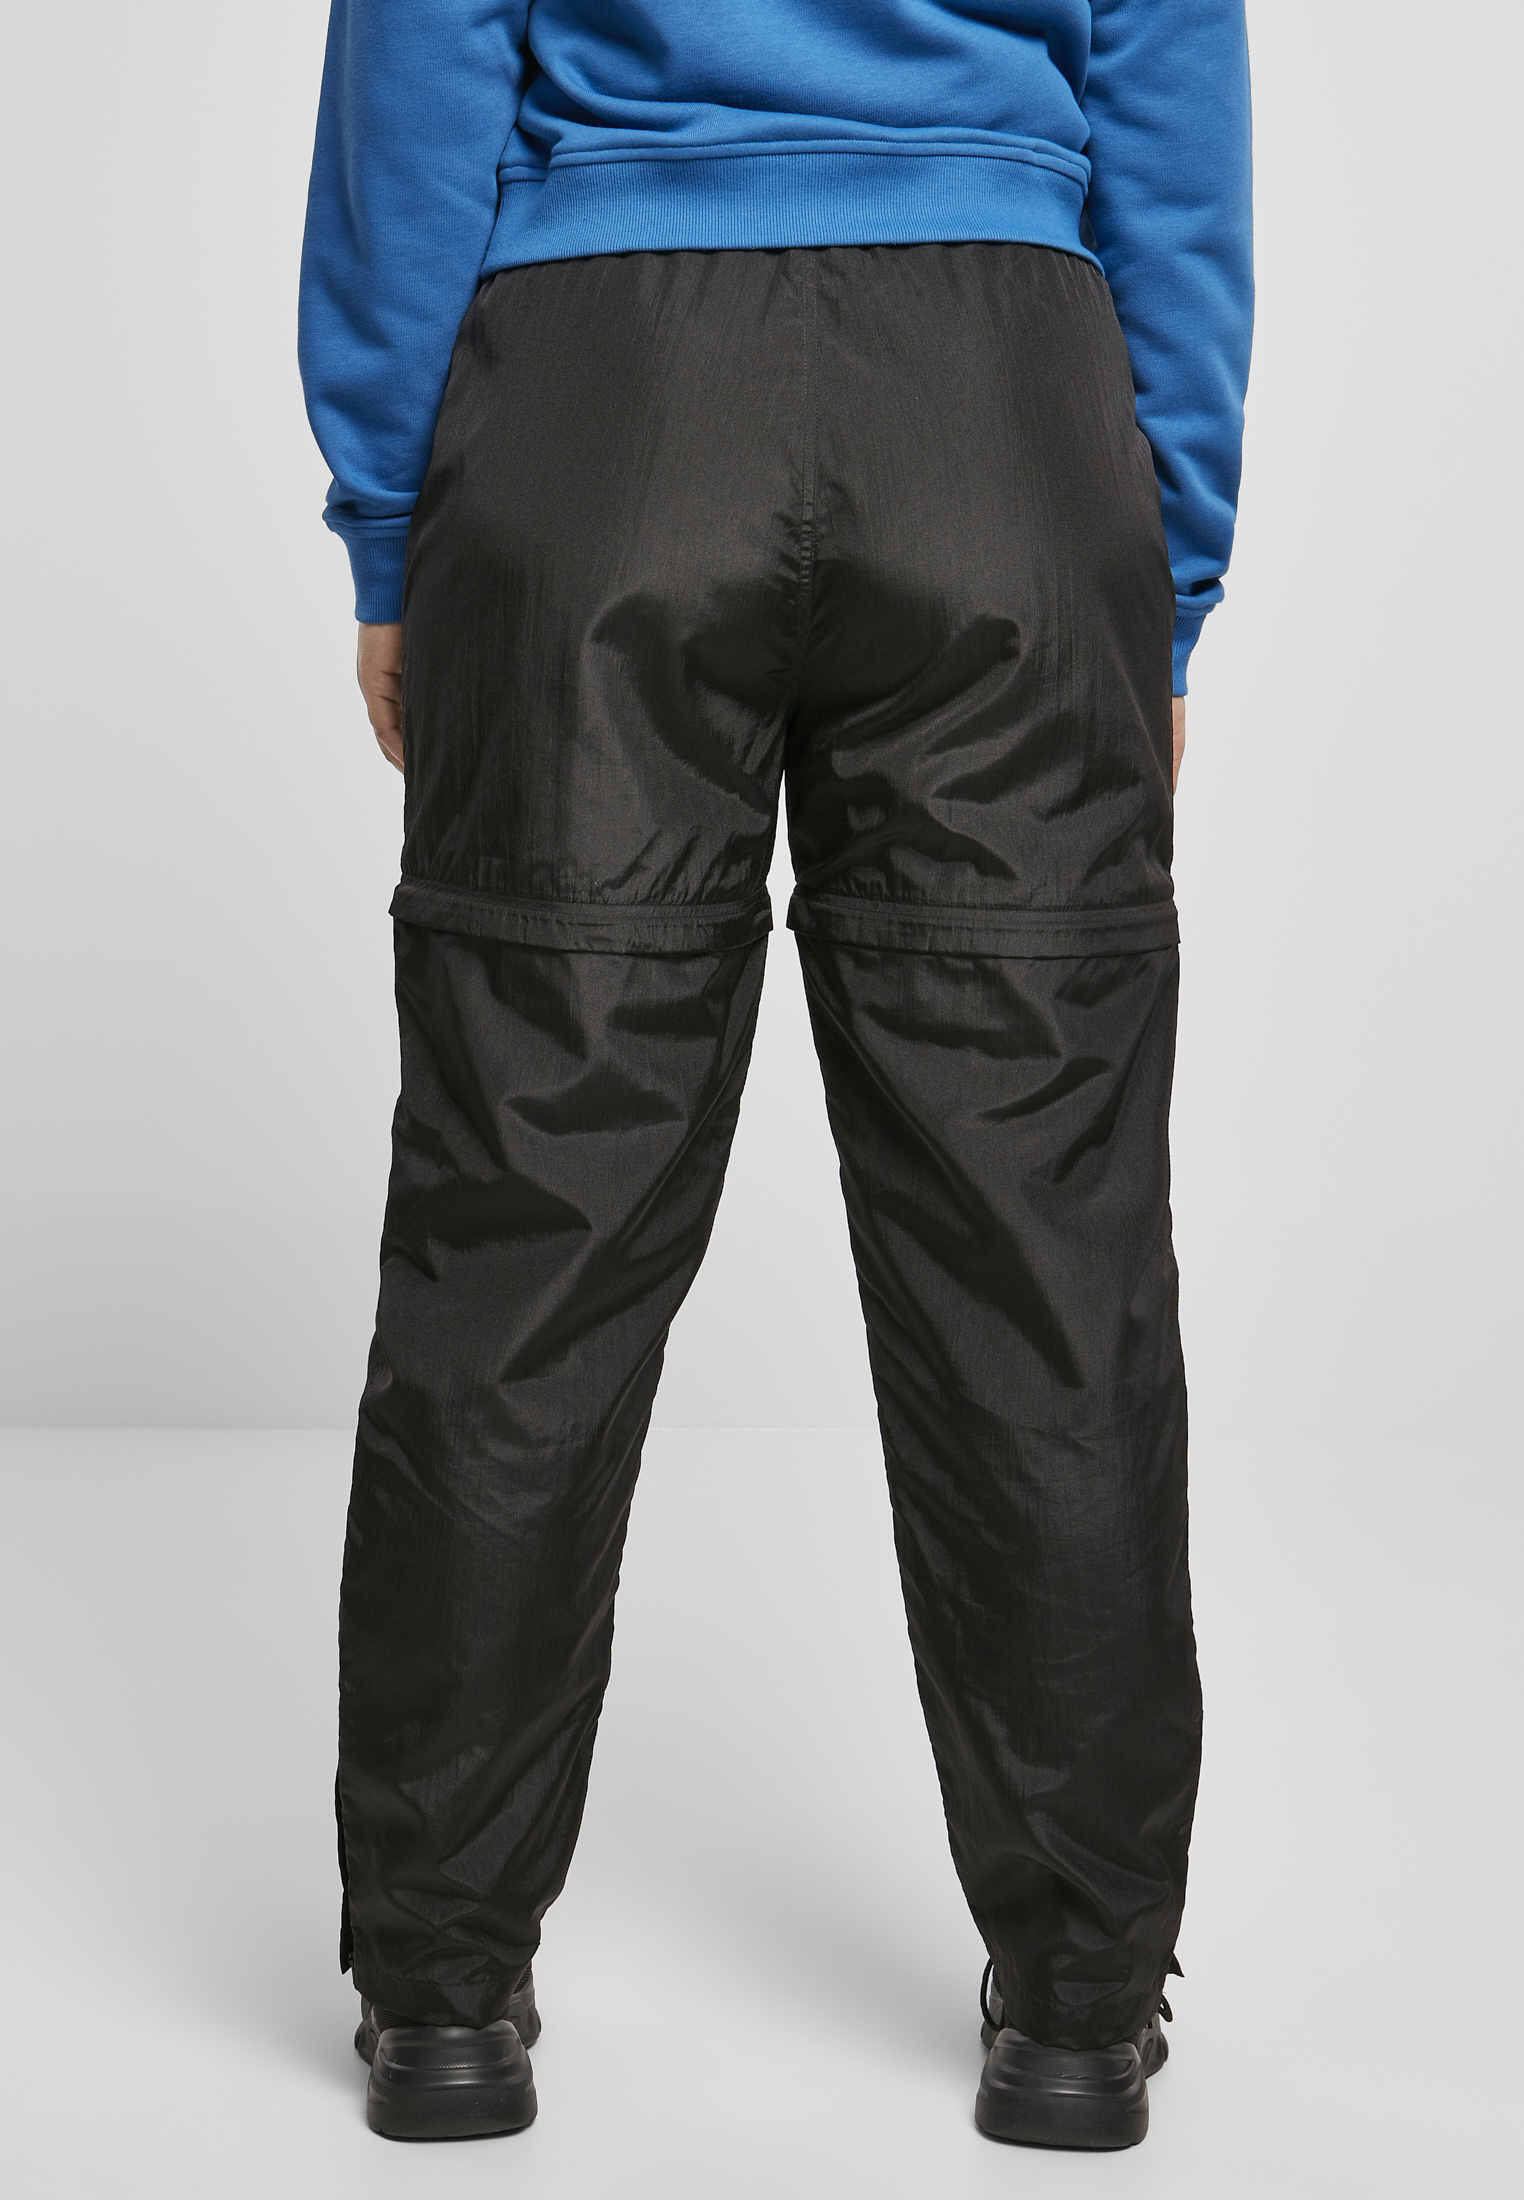 | Nylon UC Ladies Pants Zip vielseitig Bequem Hosen Shiny und Curvy Crinkle |